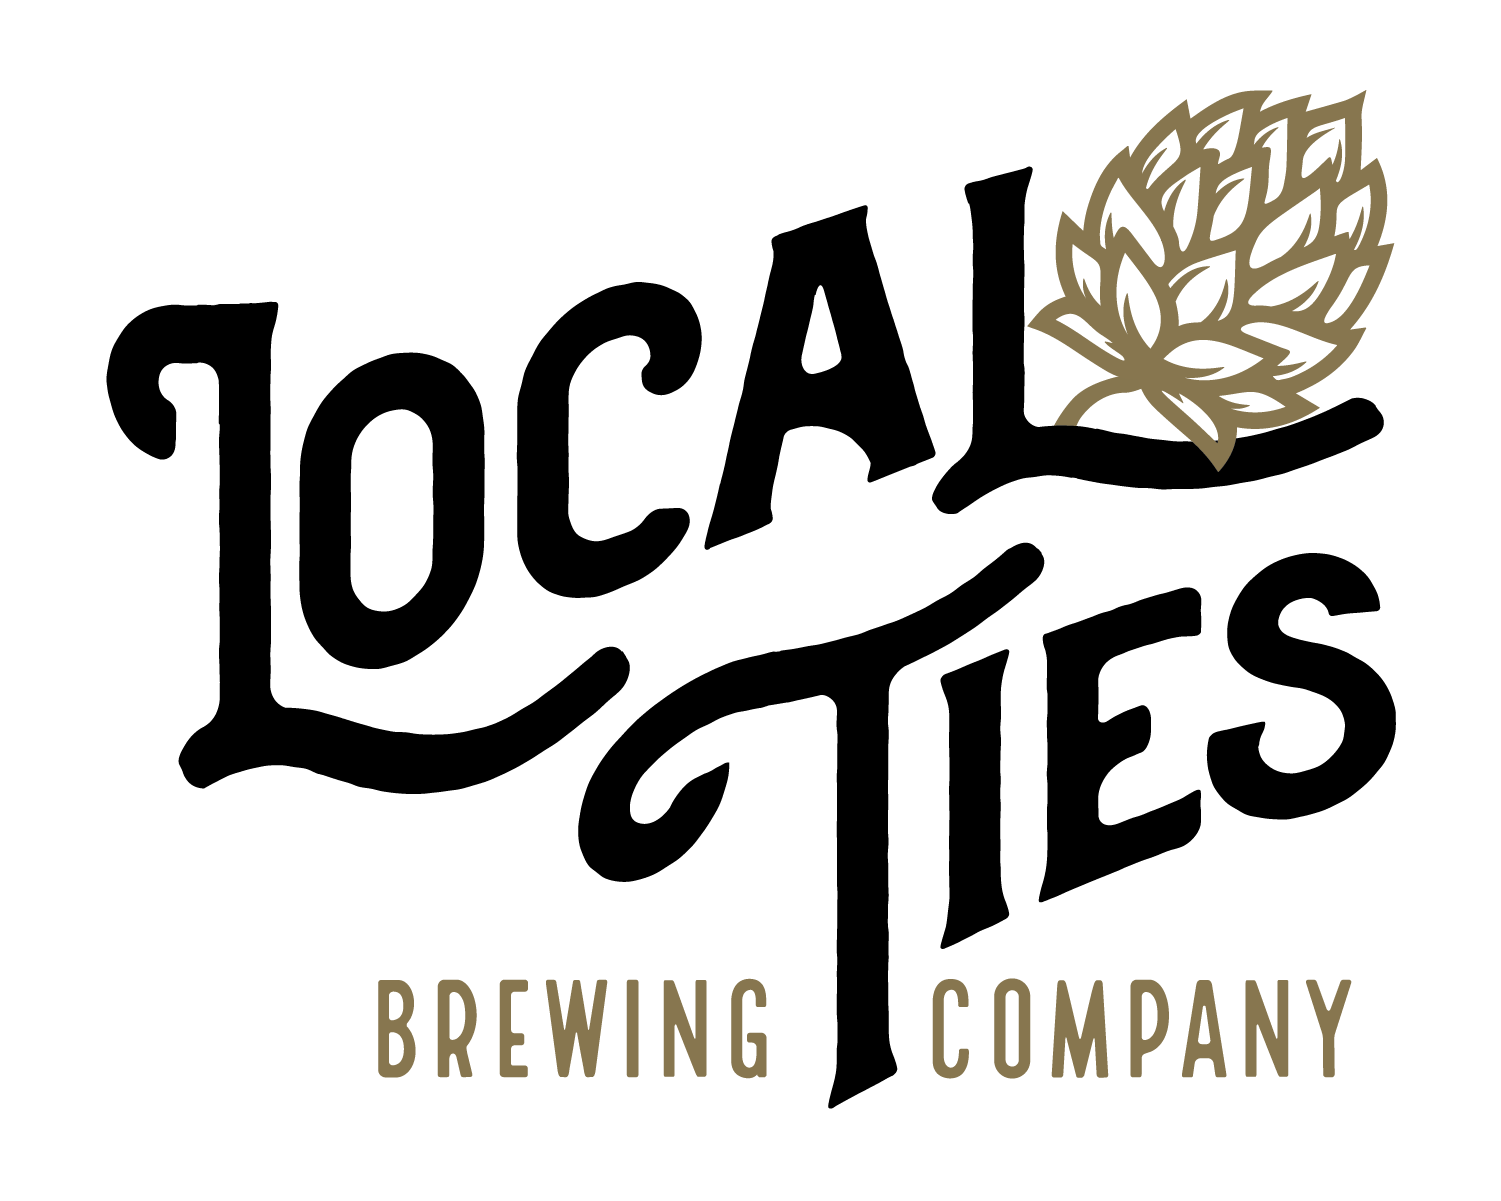 Local Ties Brewing Company